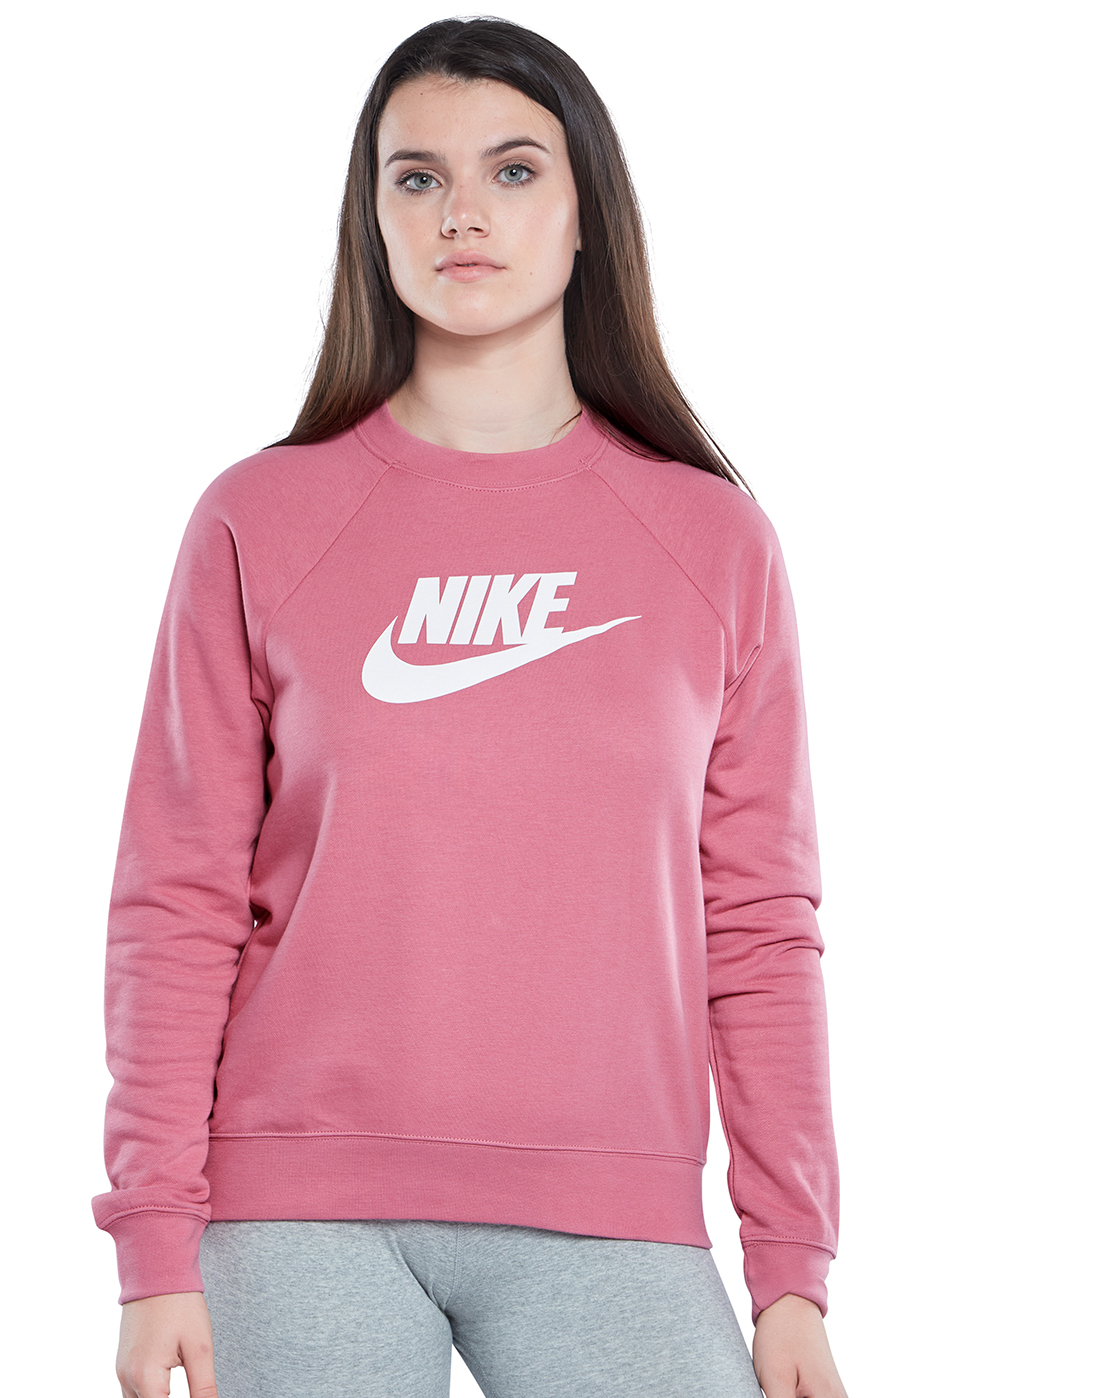 Nike Womens Essential Fleece Crew Sweatshirt - Pink | Life Style Sports IE